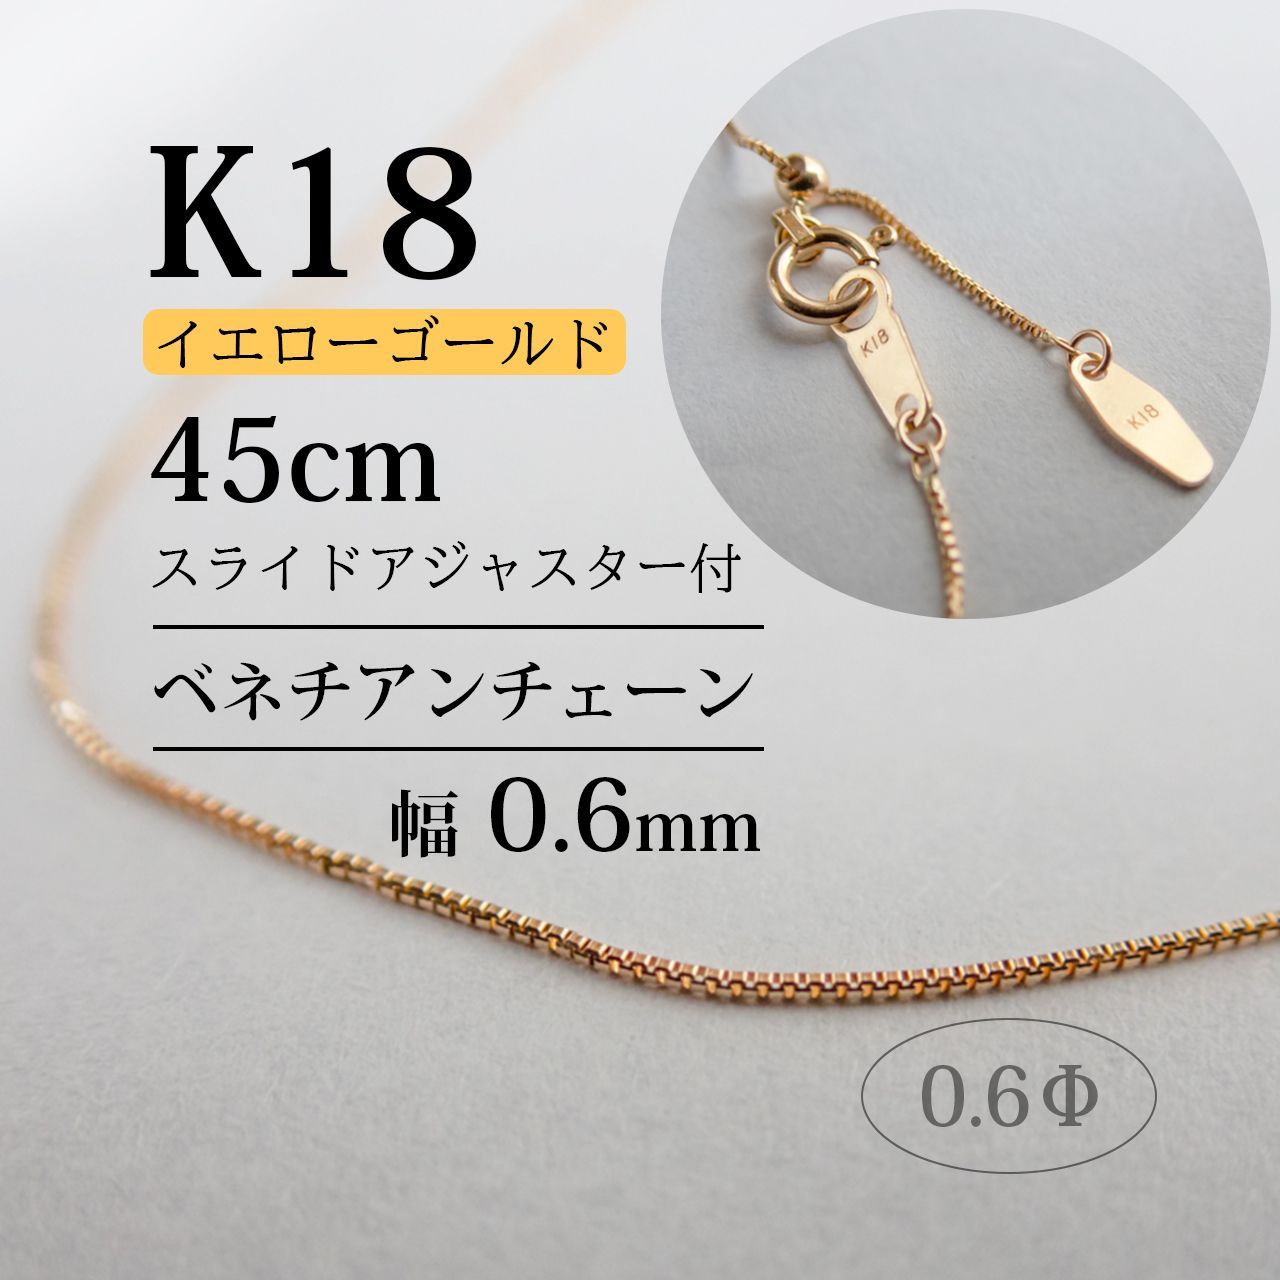 k18 18金 ネックレス ベネチアンチェーン 45cm - ネックレス